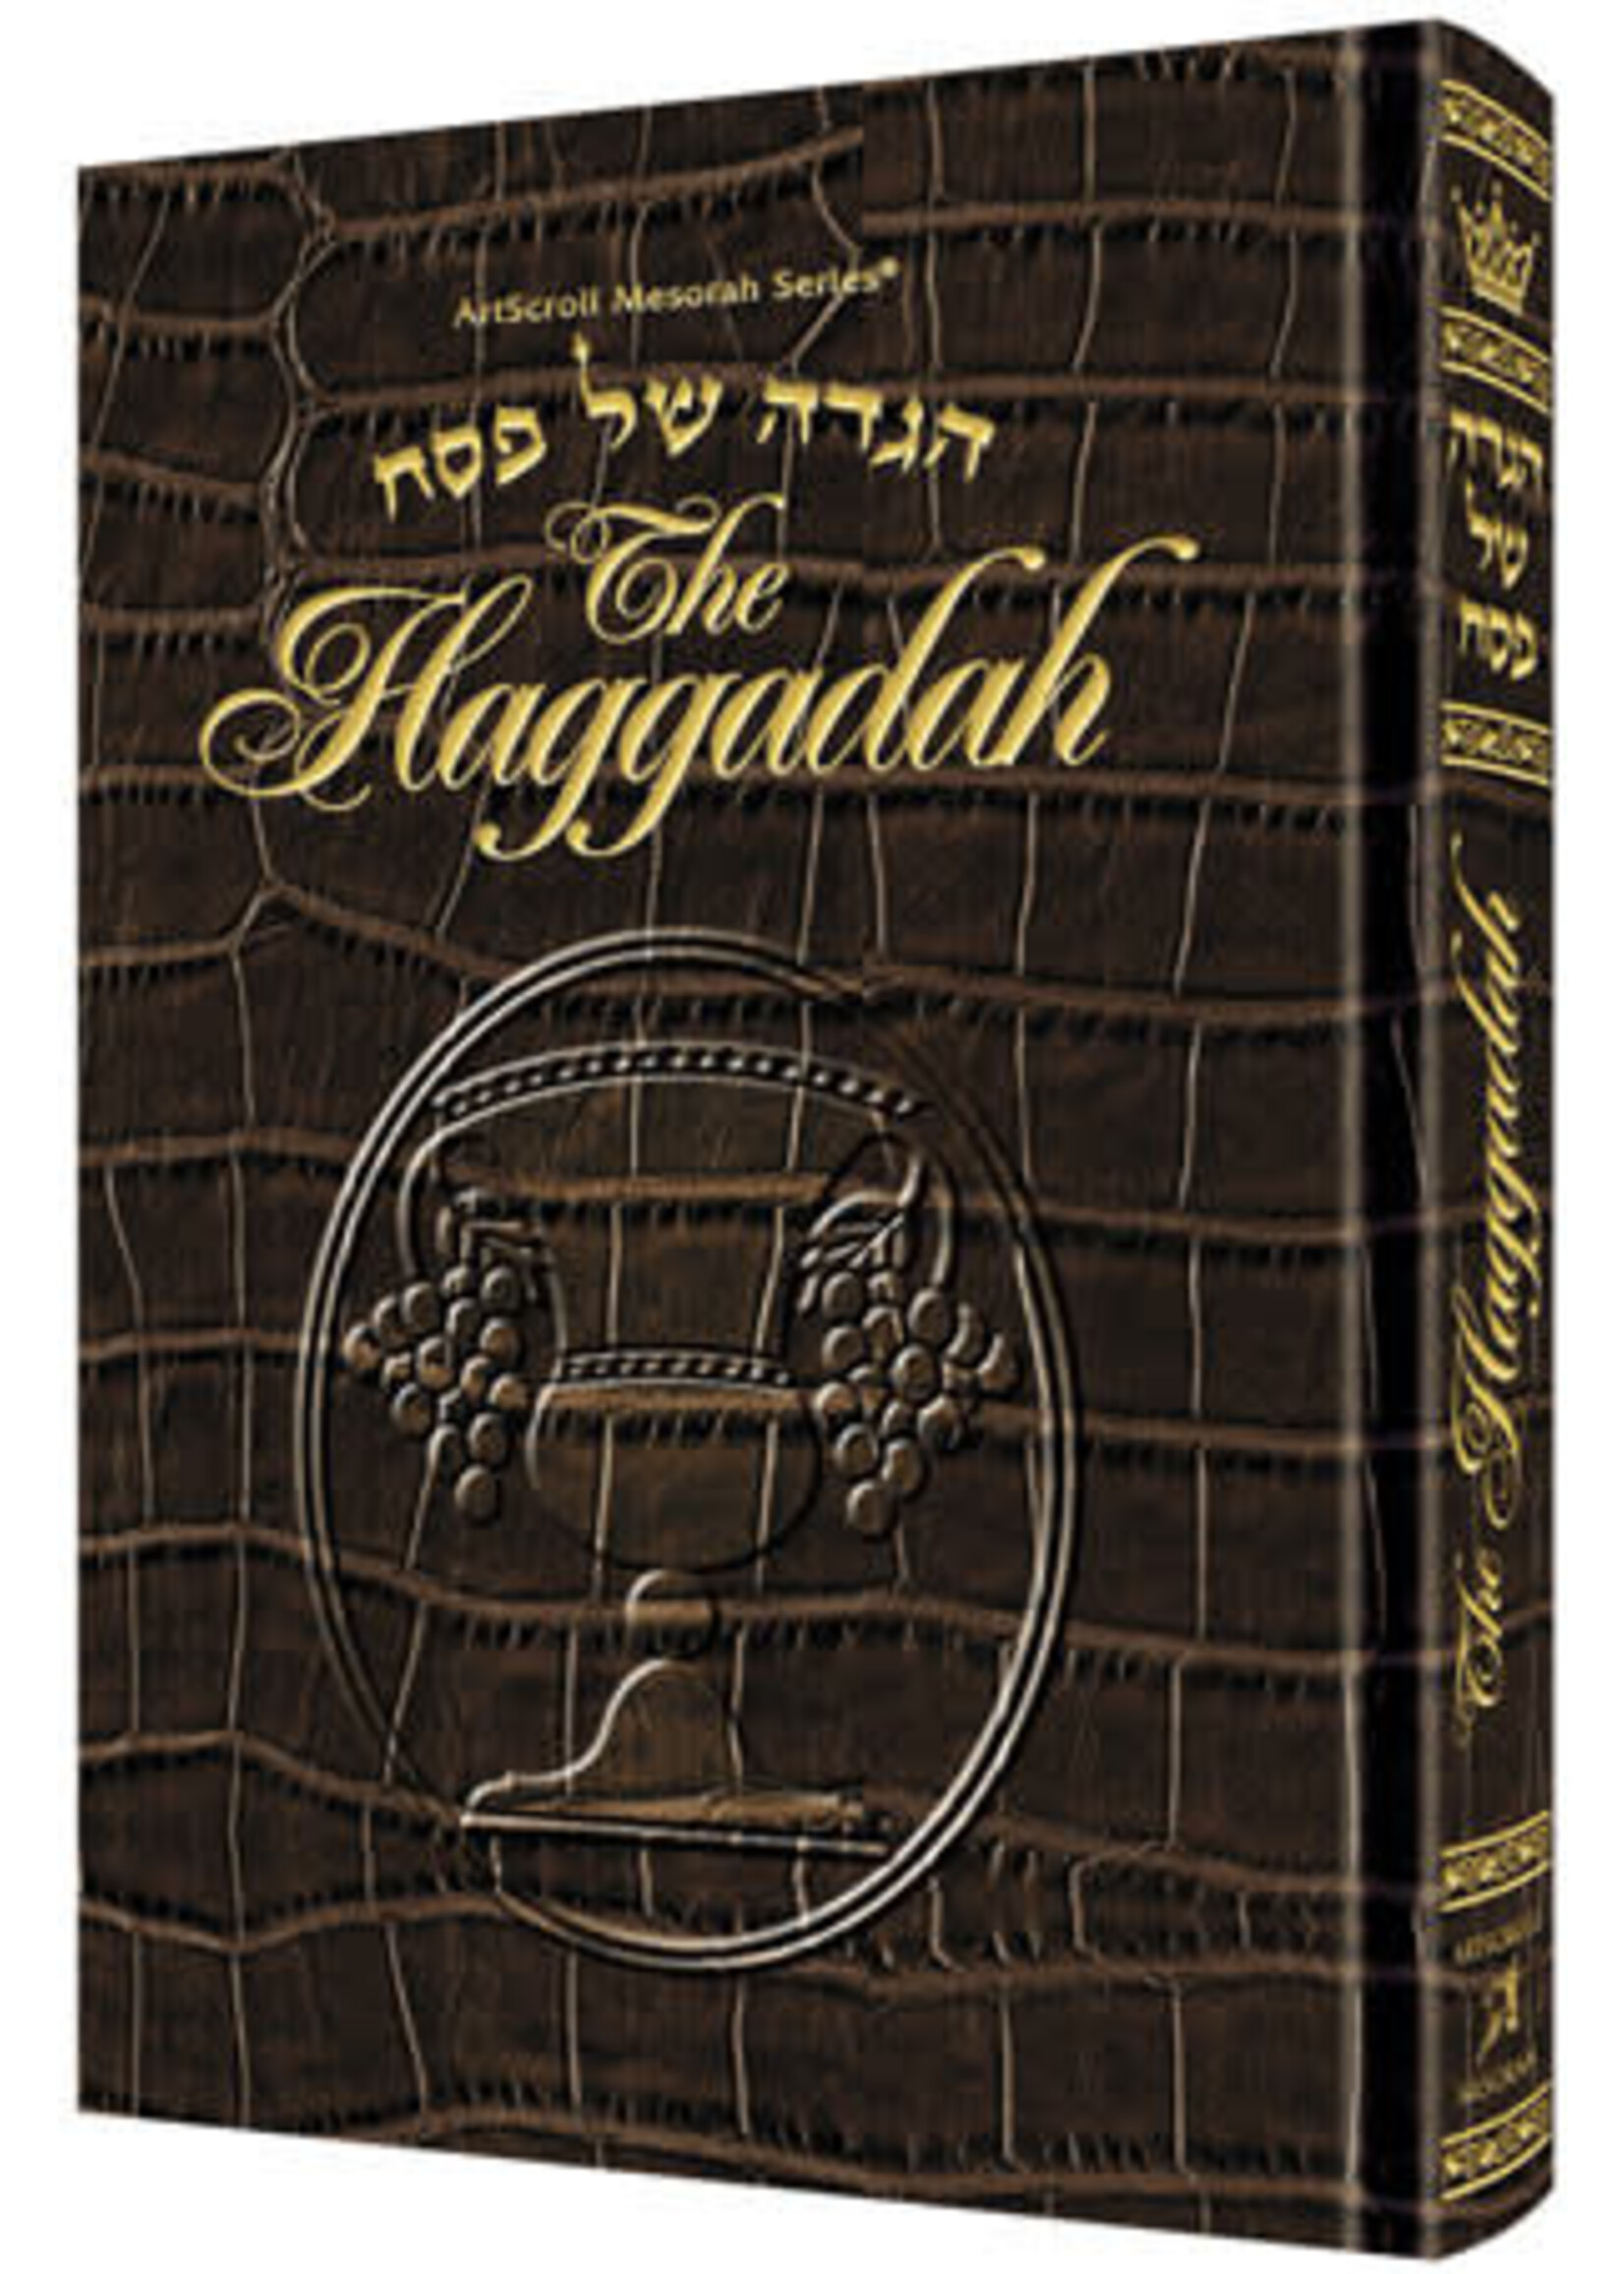 HAGGADAH - ELIAS LEATHER ALIGATOR